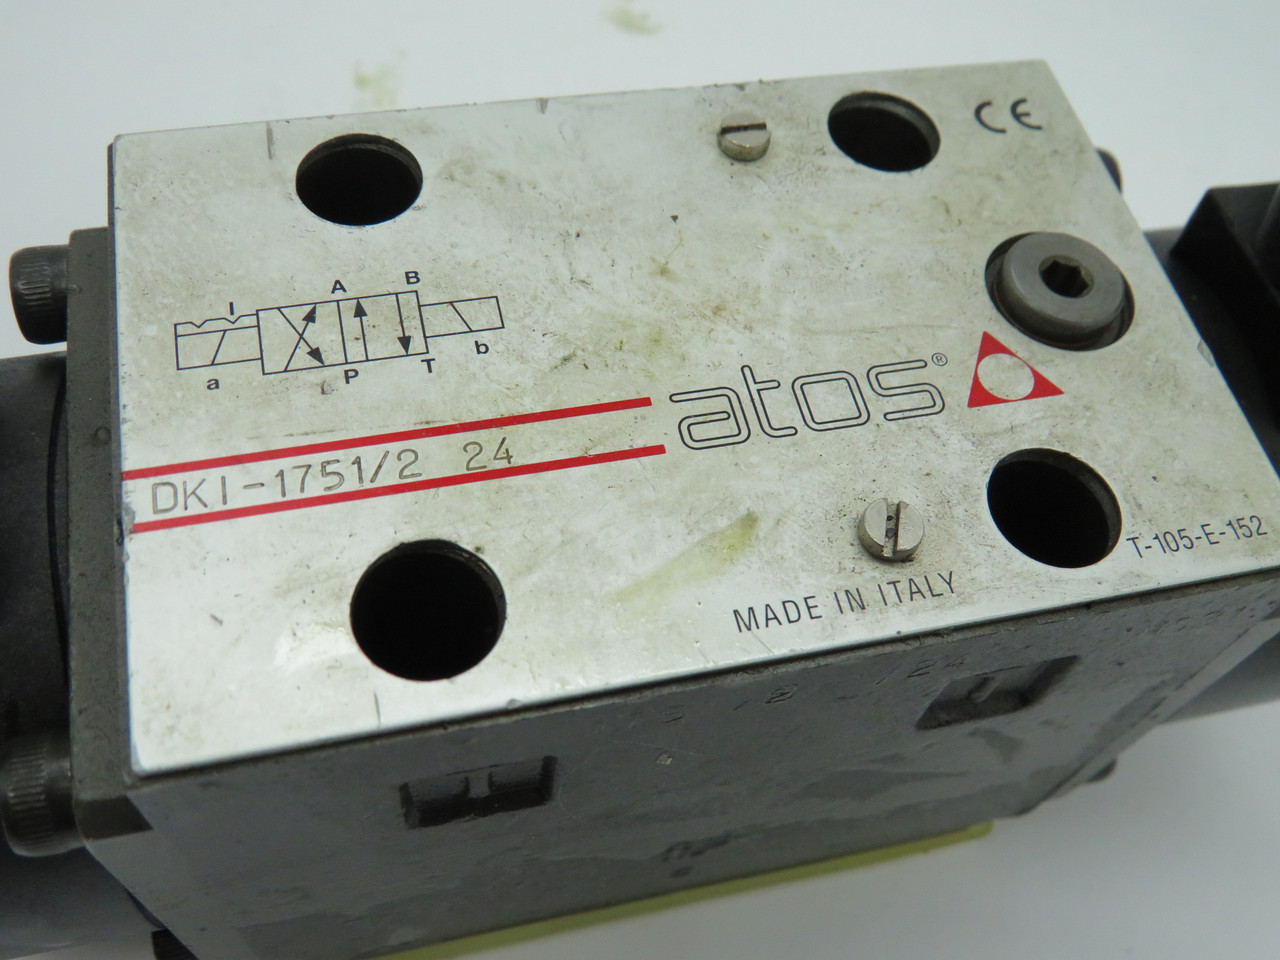 Atos DKI-1751/2-24 Directional Control Valve 24VDC USED